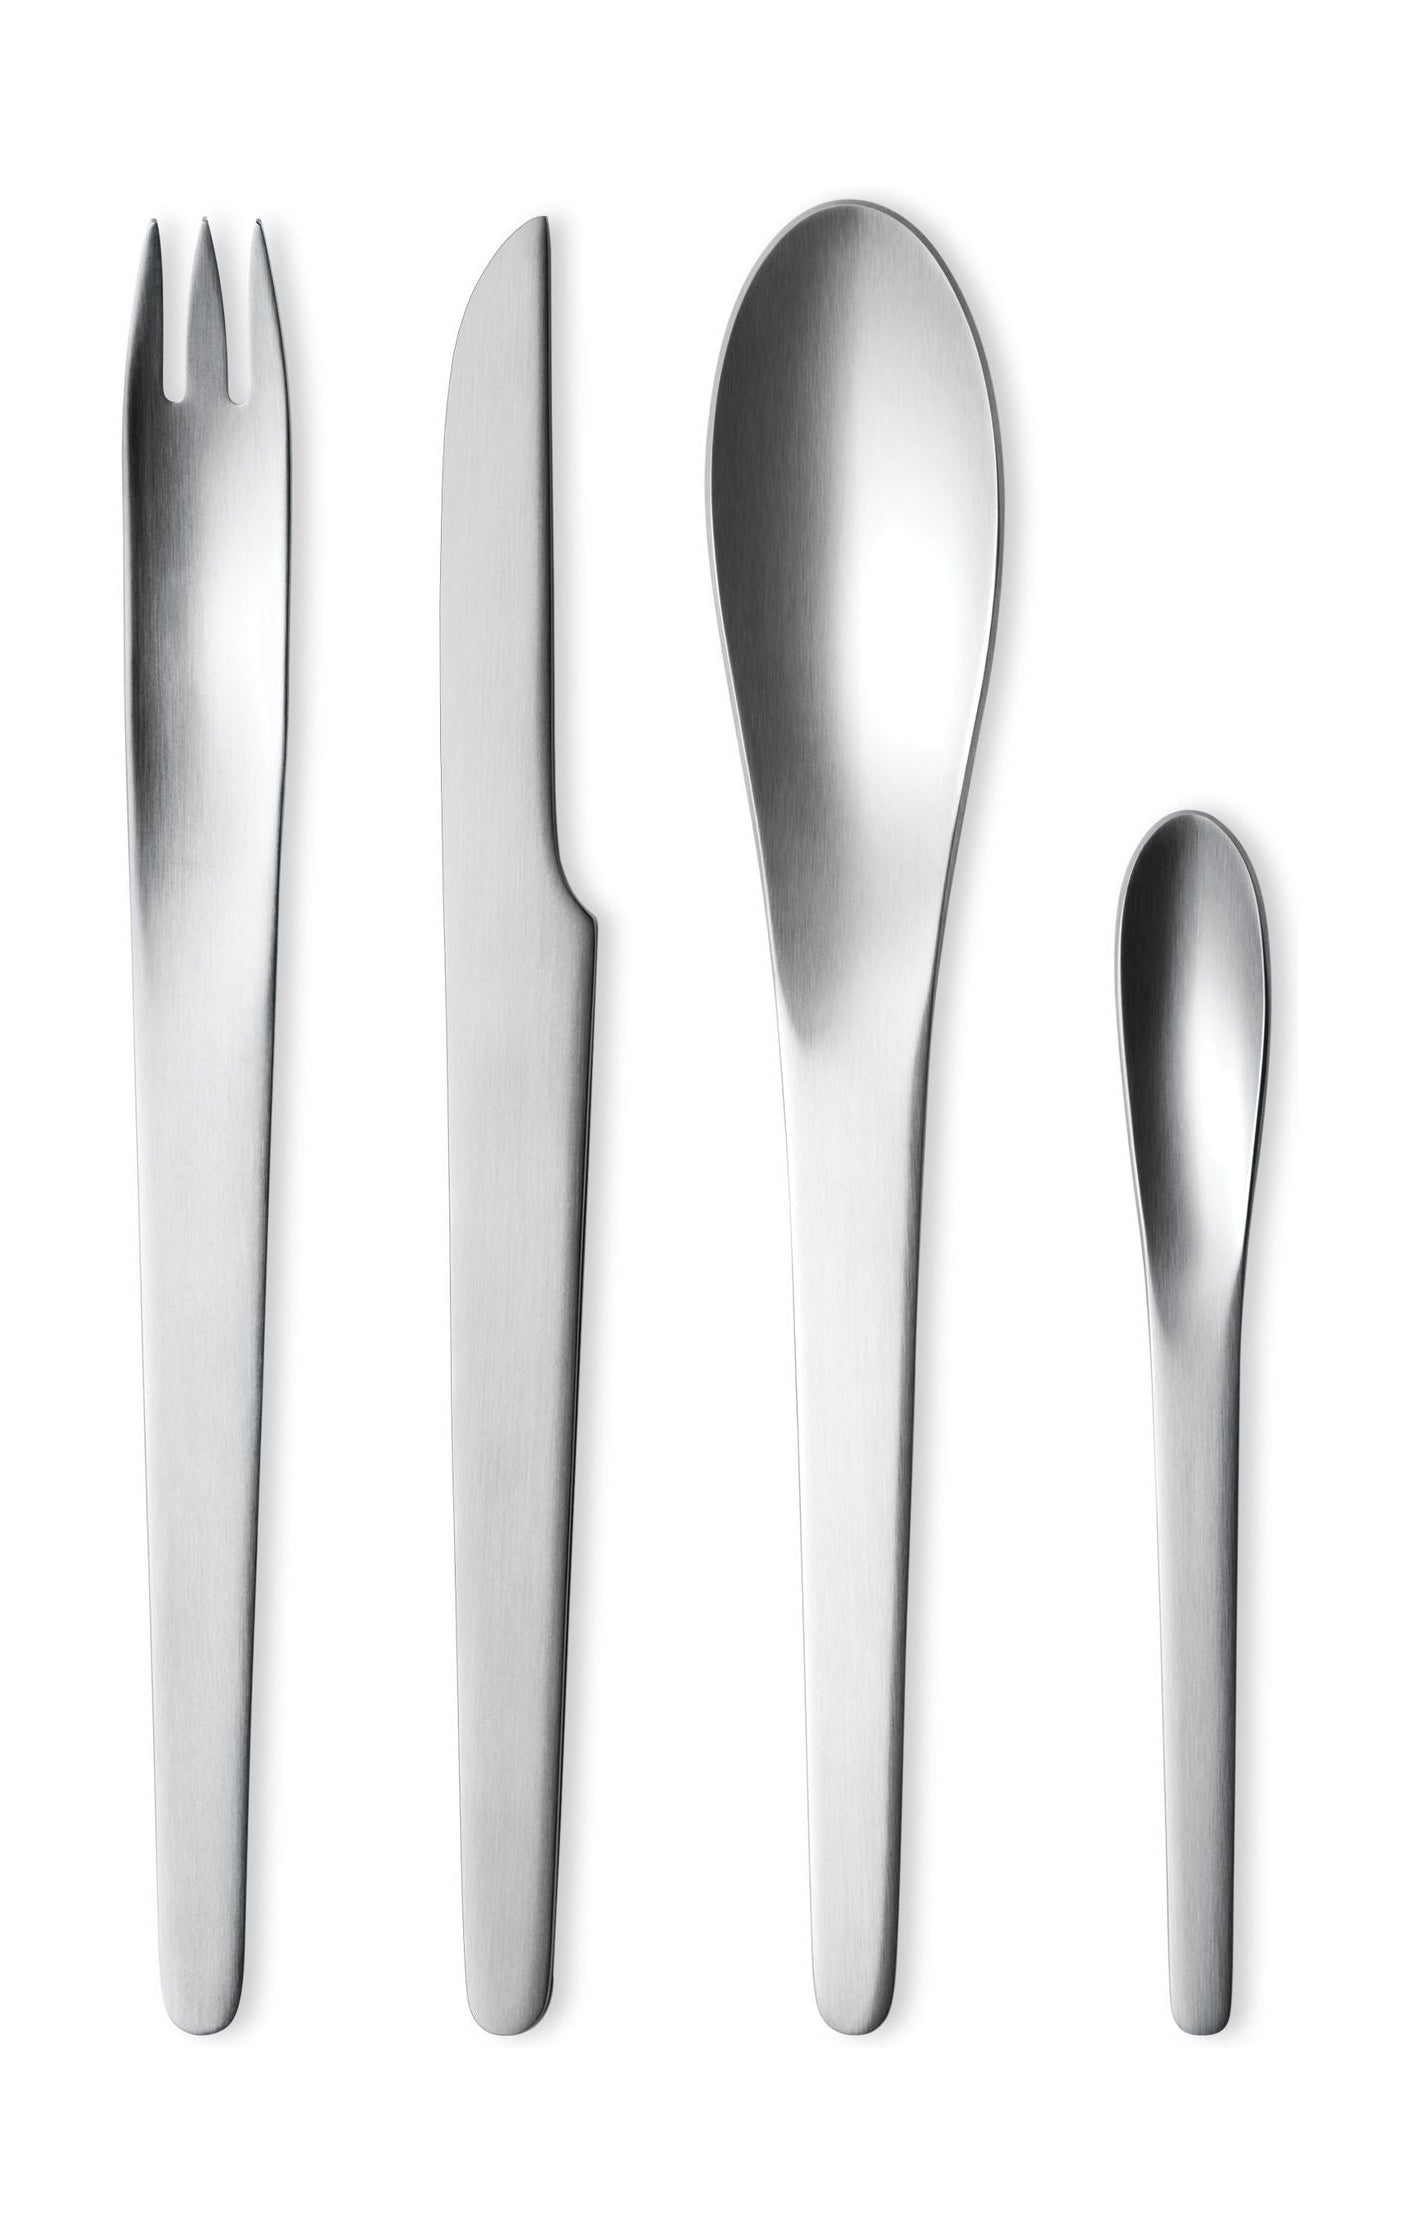 Georg Jensen Arne Jacobsen Cutlery, 16 Piece Set